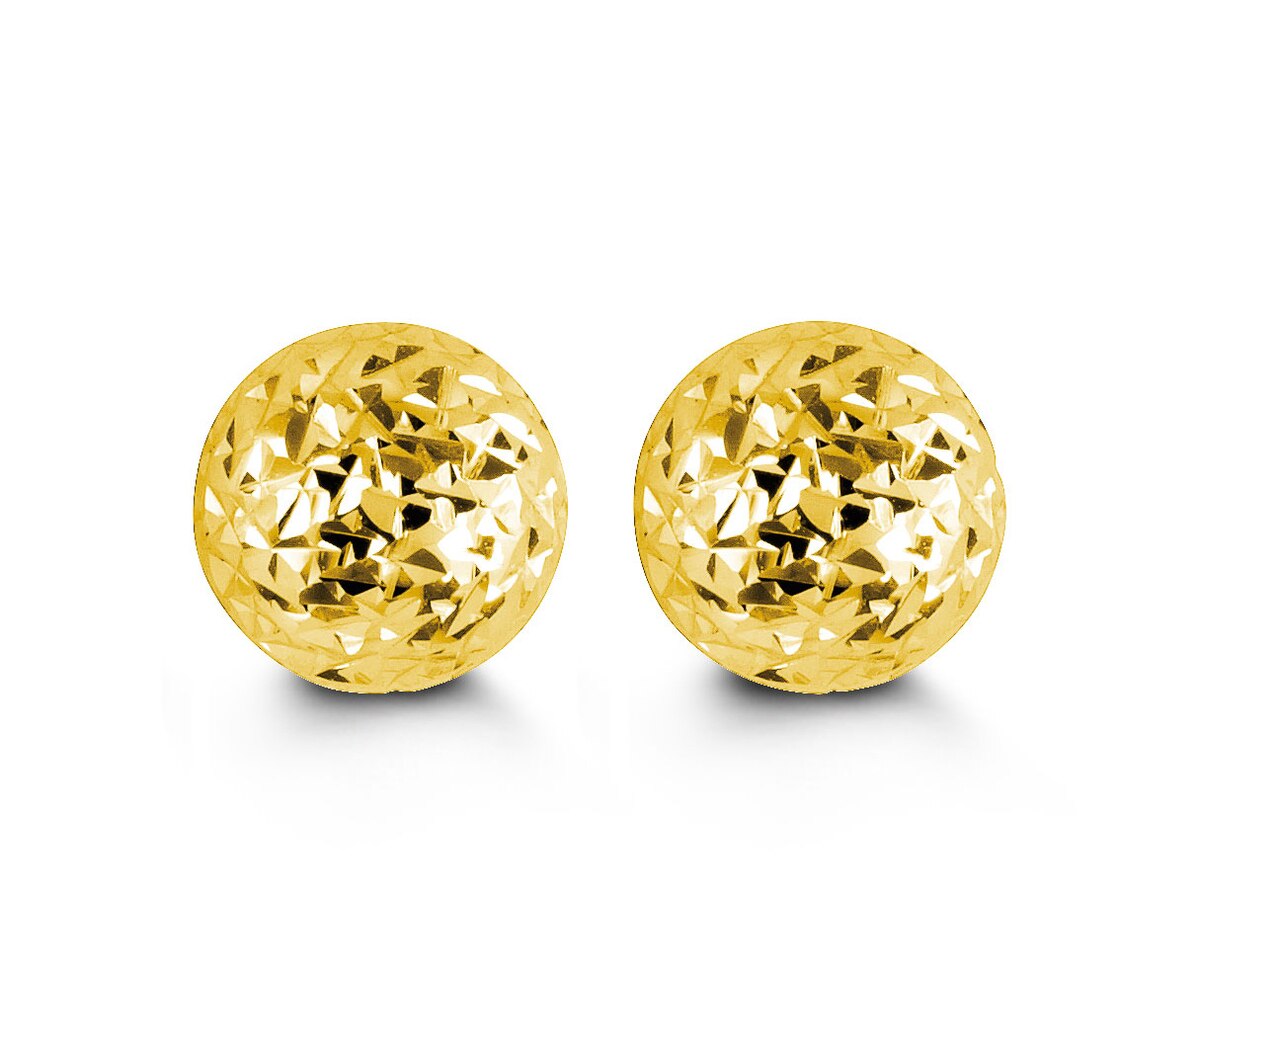 10KT Yellow Gold Textured Ball Style Earrings 10mm Diameter